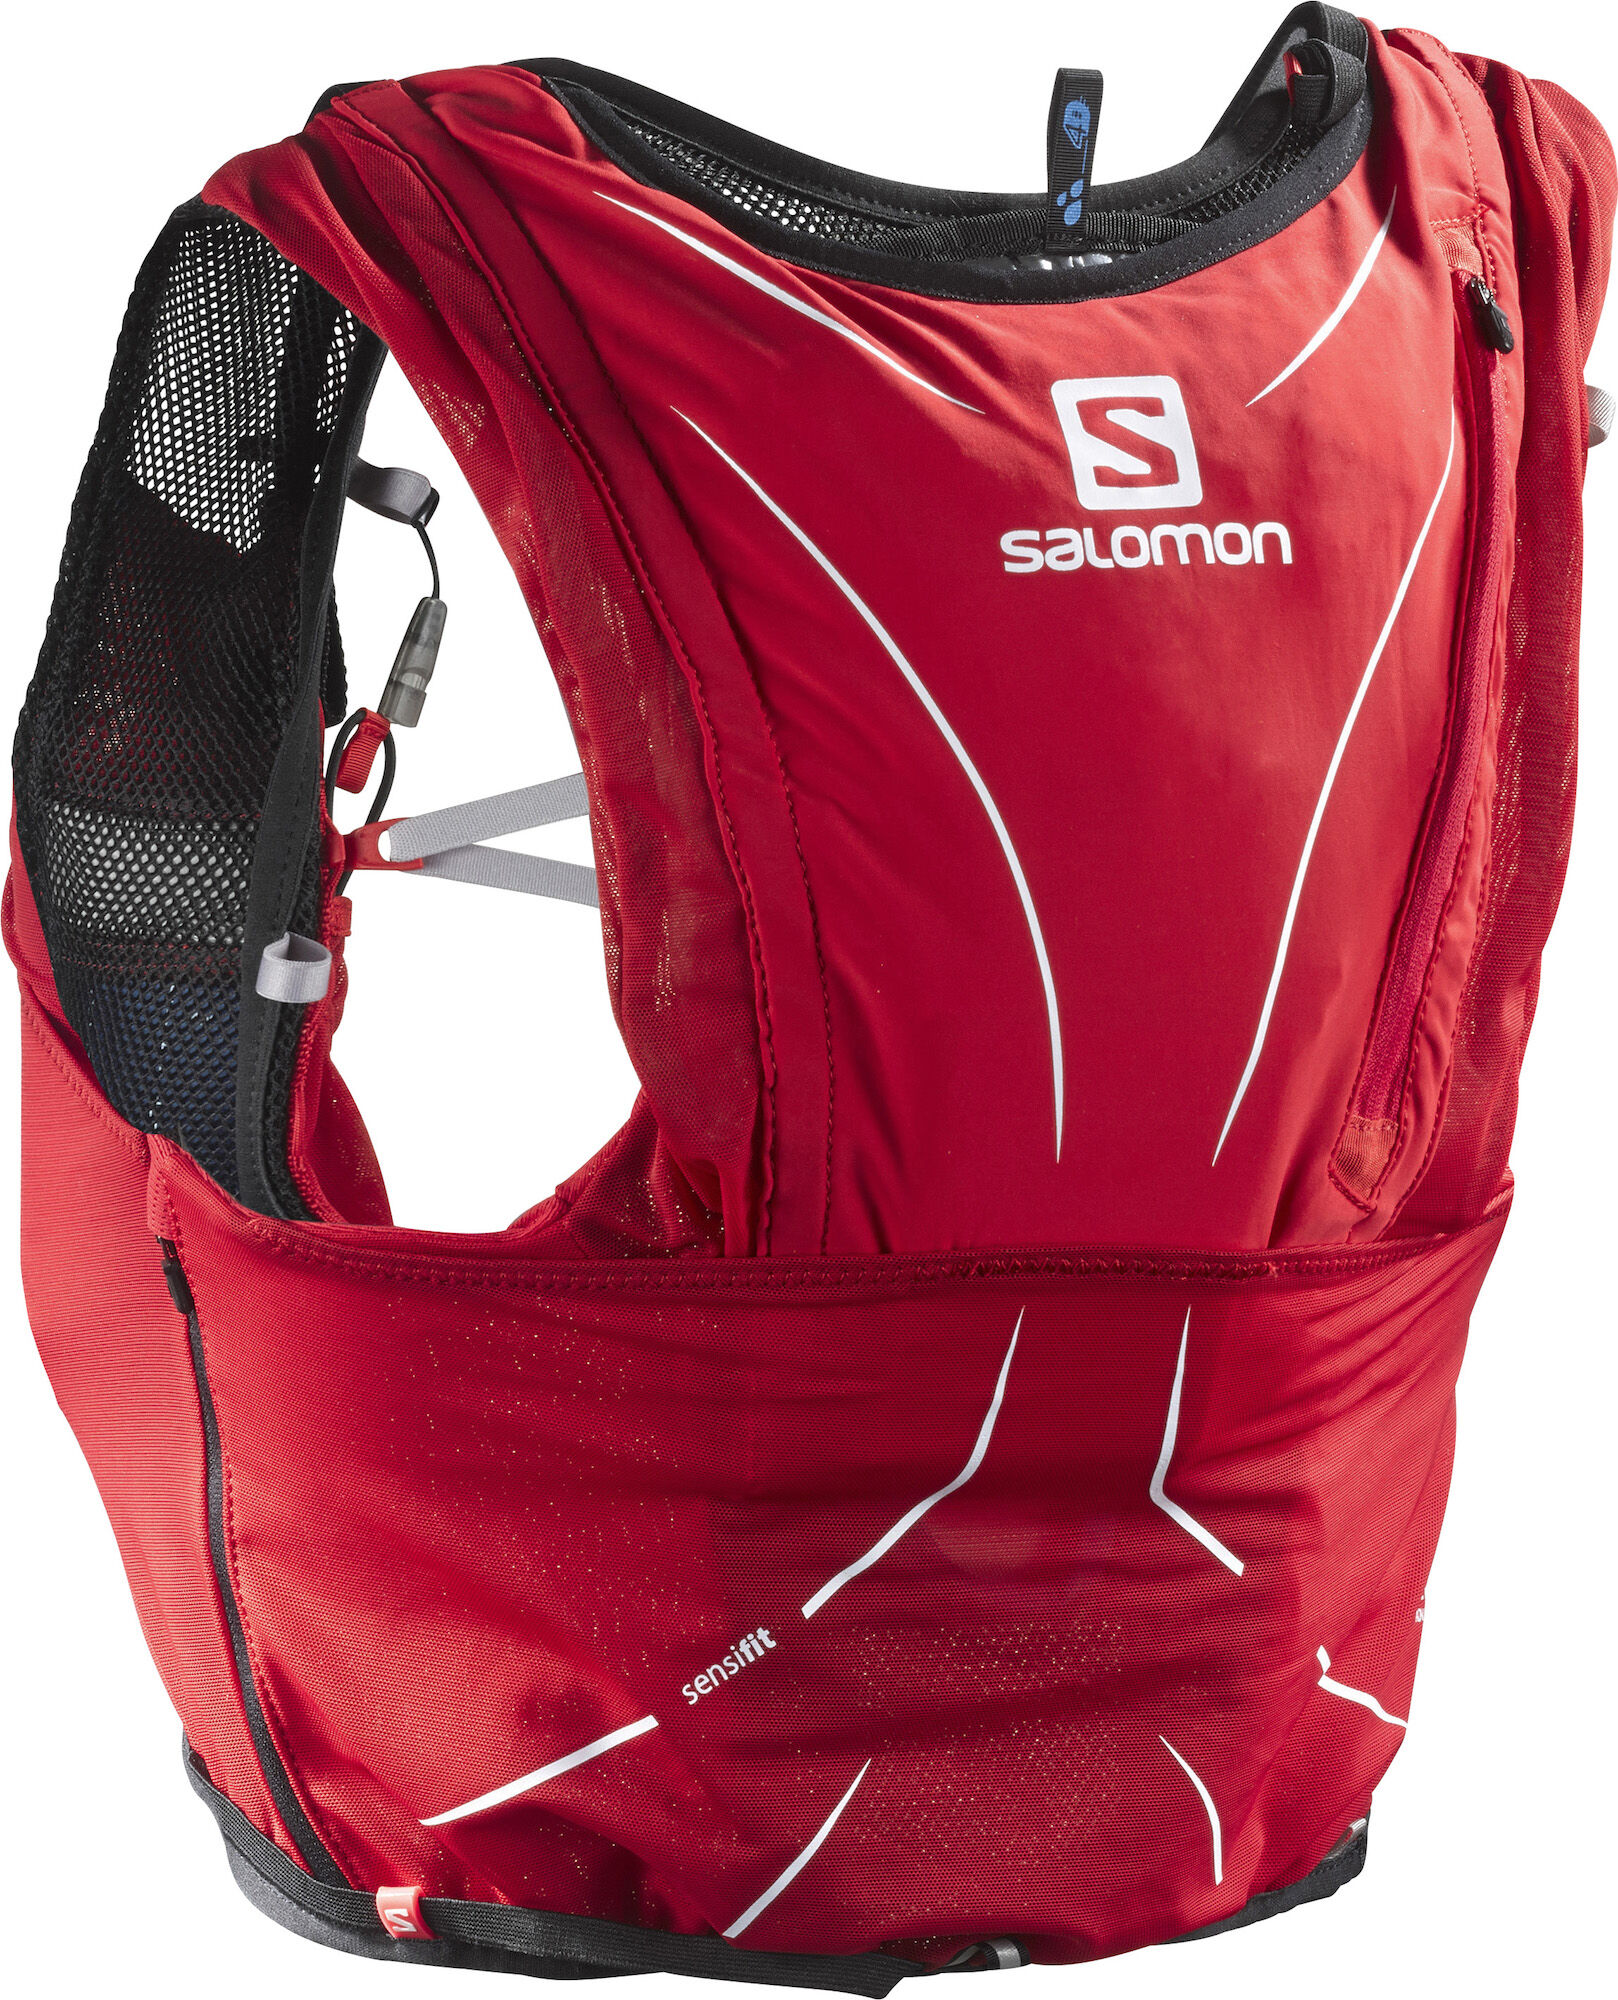 Salomon - Advanced Skin 12 Set - Hydratation pack